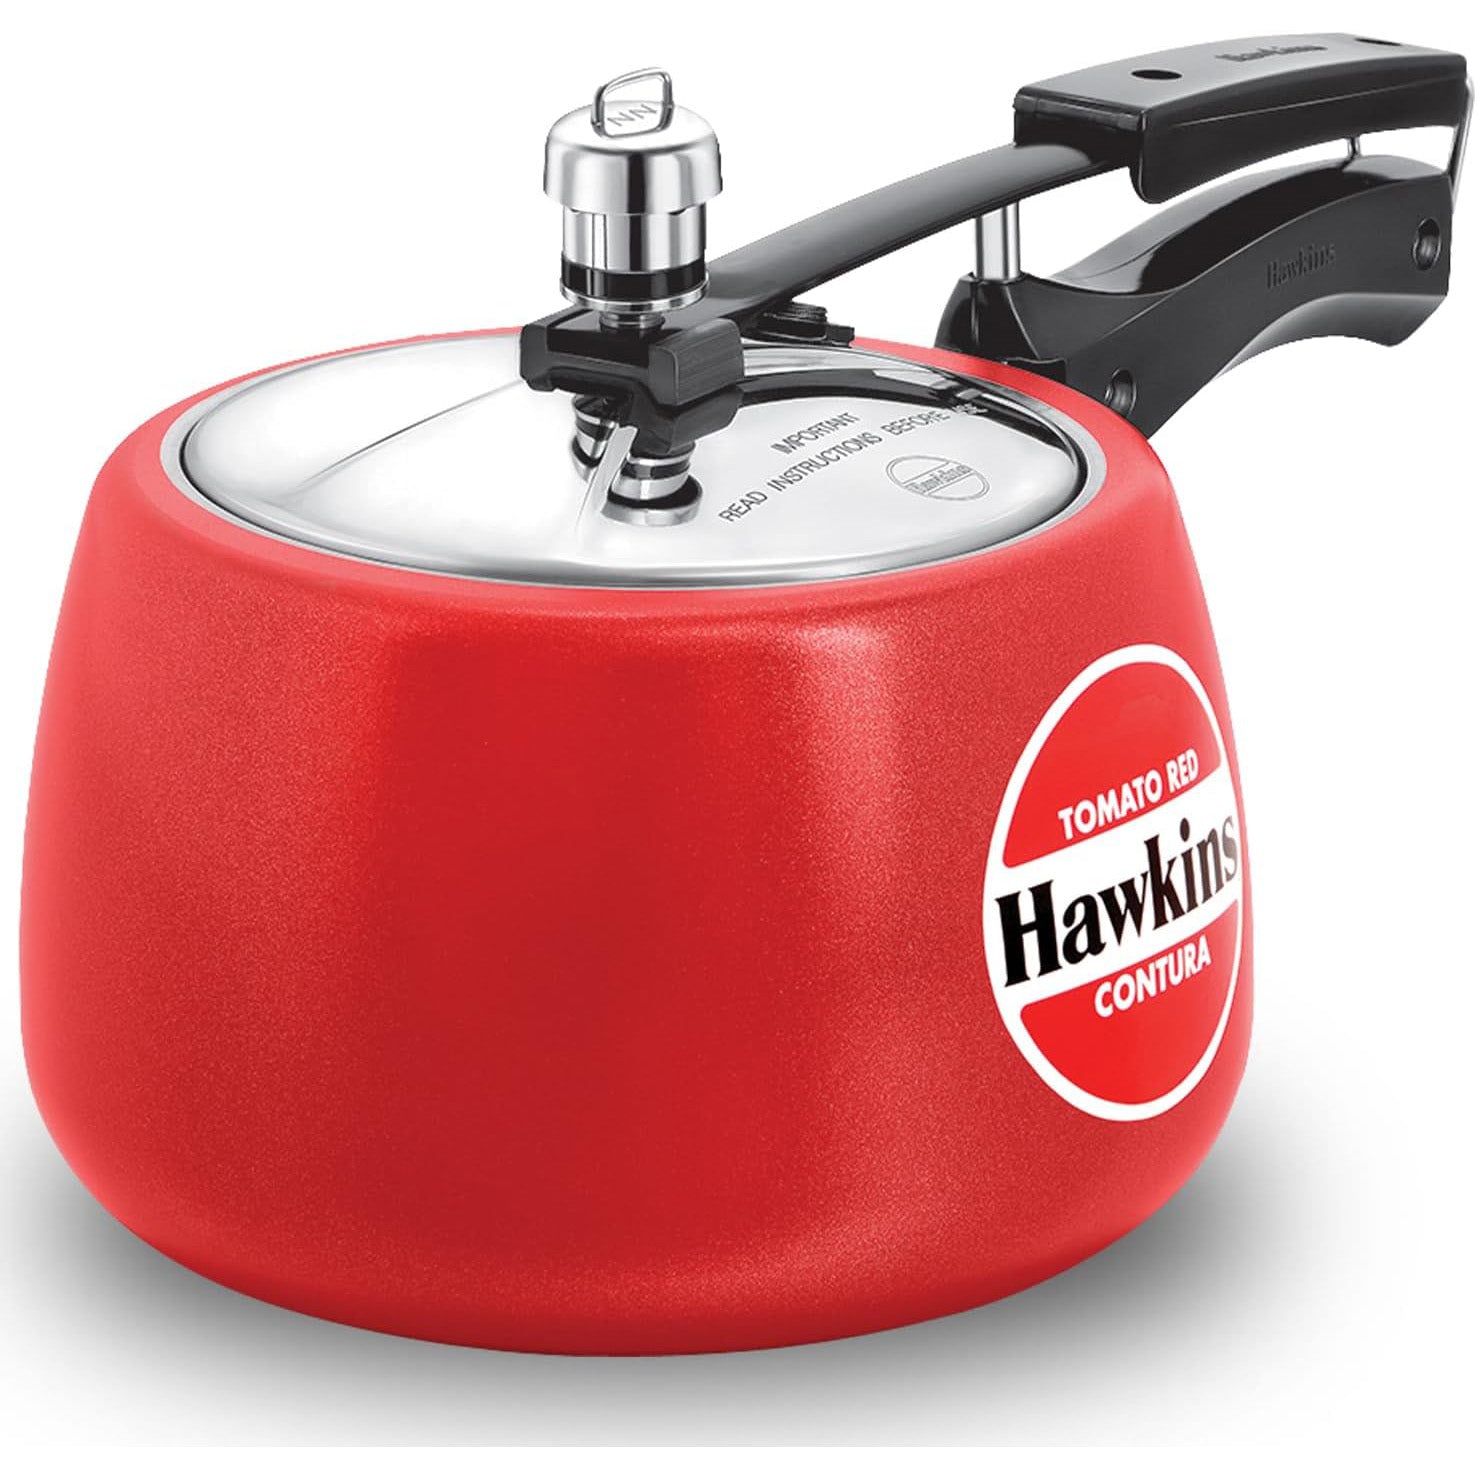 Hawkins Contura Ceramic Coat Red Pressure Cooker, 3 litre